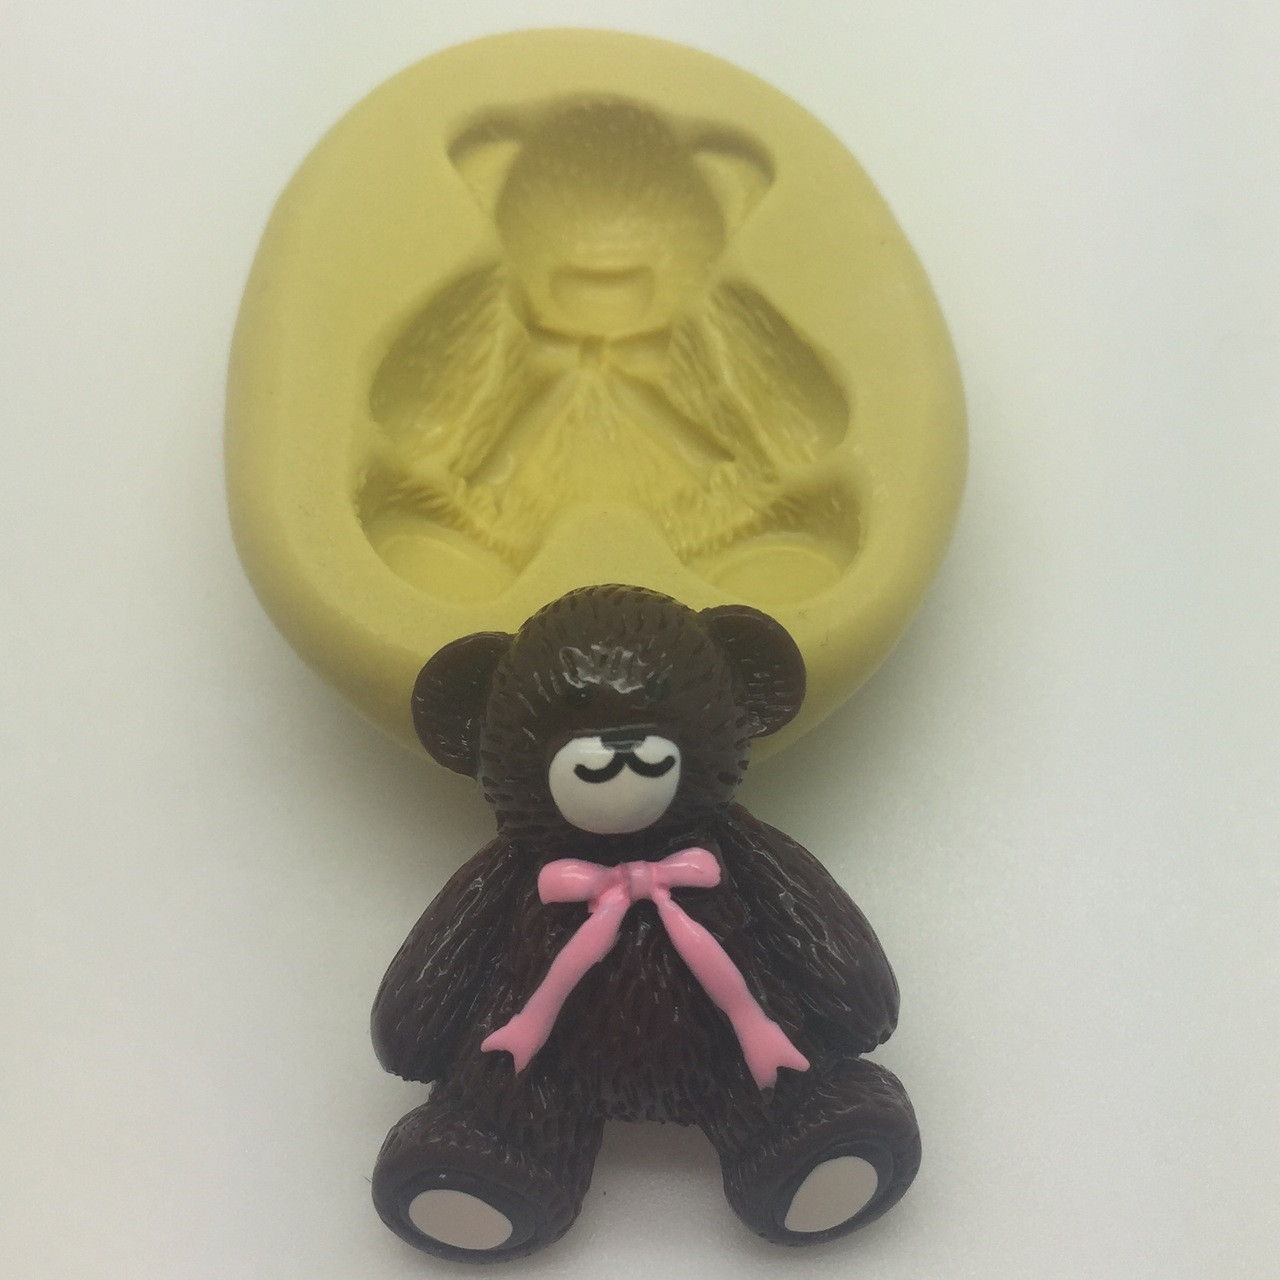 Xl Teddy Bear Mold Silicone - Christines Molds